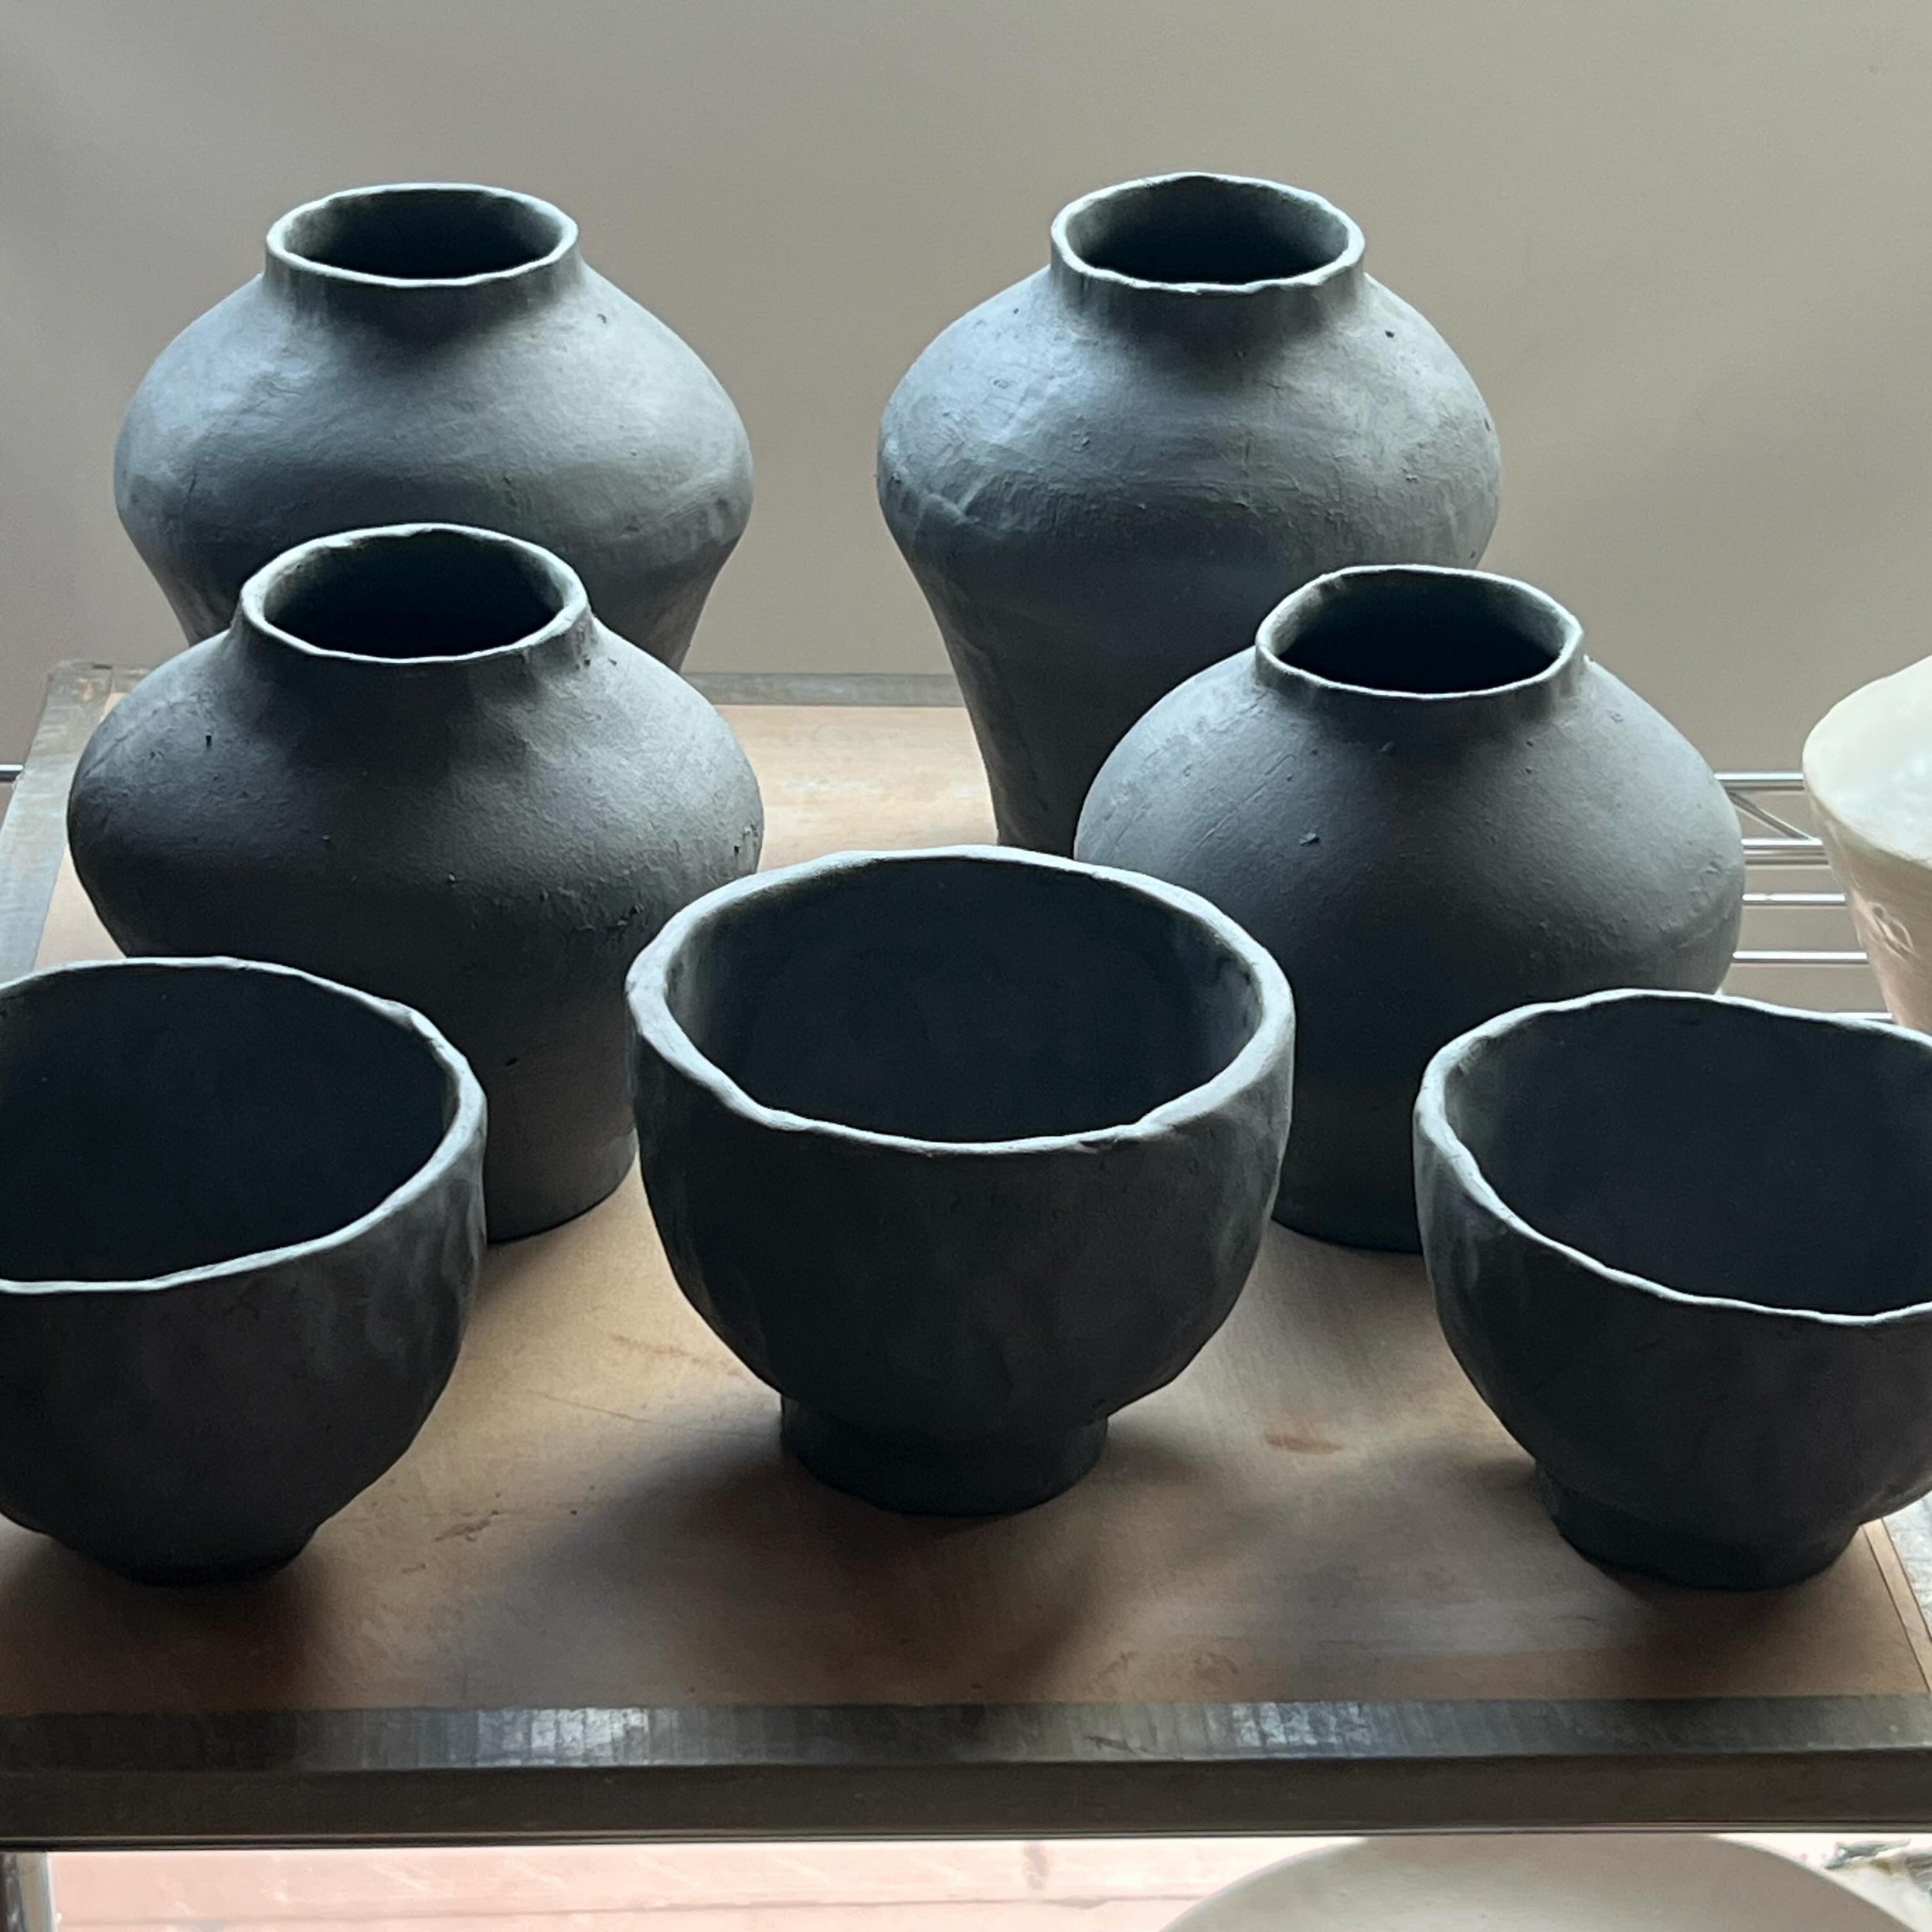 new pieces ✨~
:
:
:
:
:
:
#ceramics #clay #ceramica #mugs #earthneststudio #jodiefranco #tablesetting #wabisabi #vase ##handmade #homesweethome